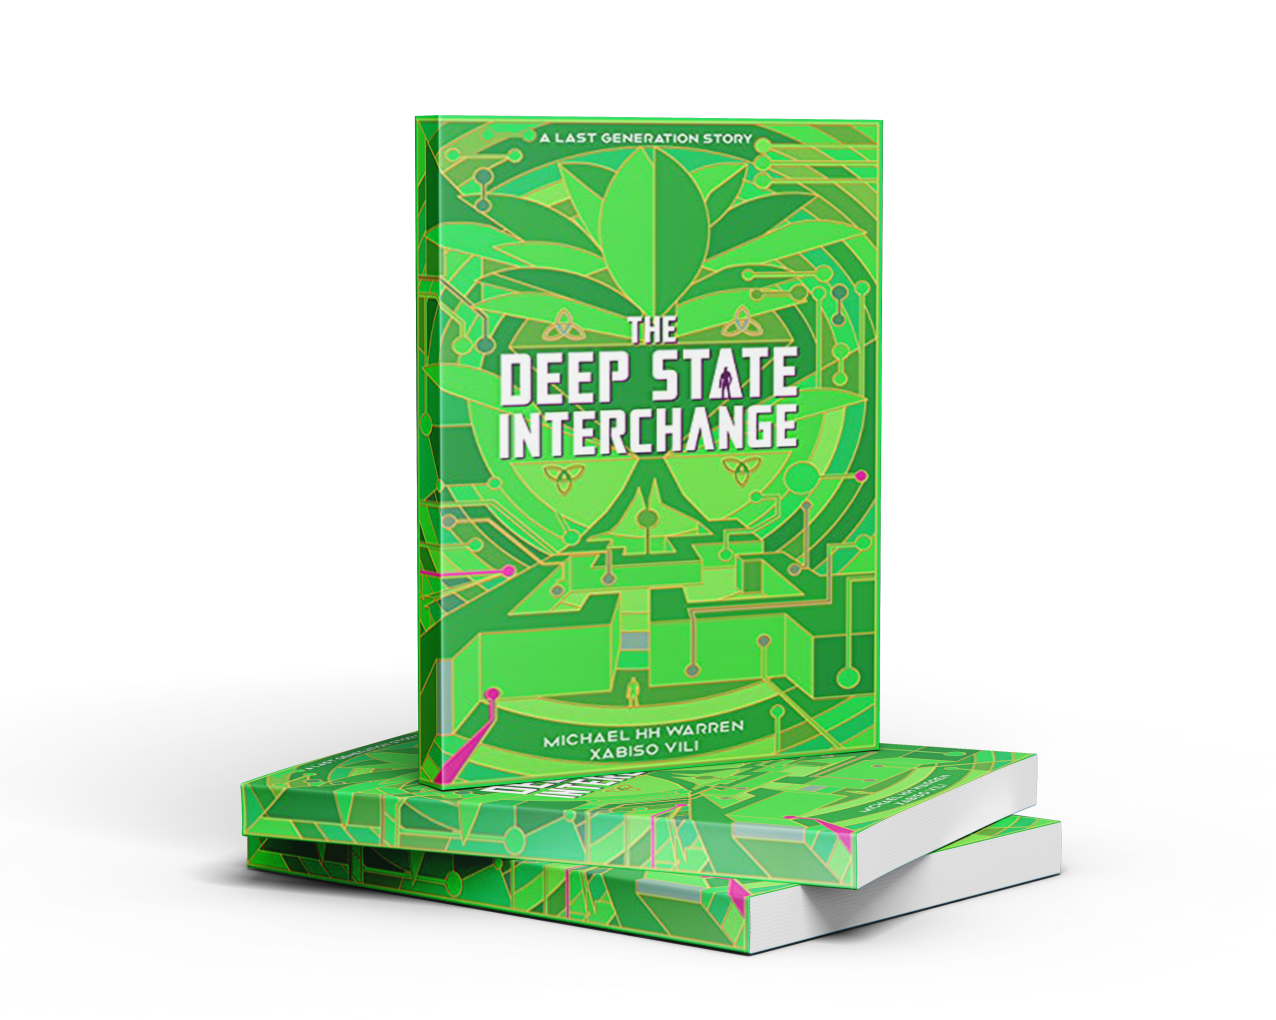 FREE: The Deep State Interchange by Michael HH Warren